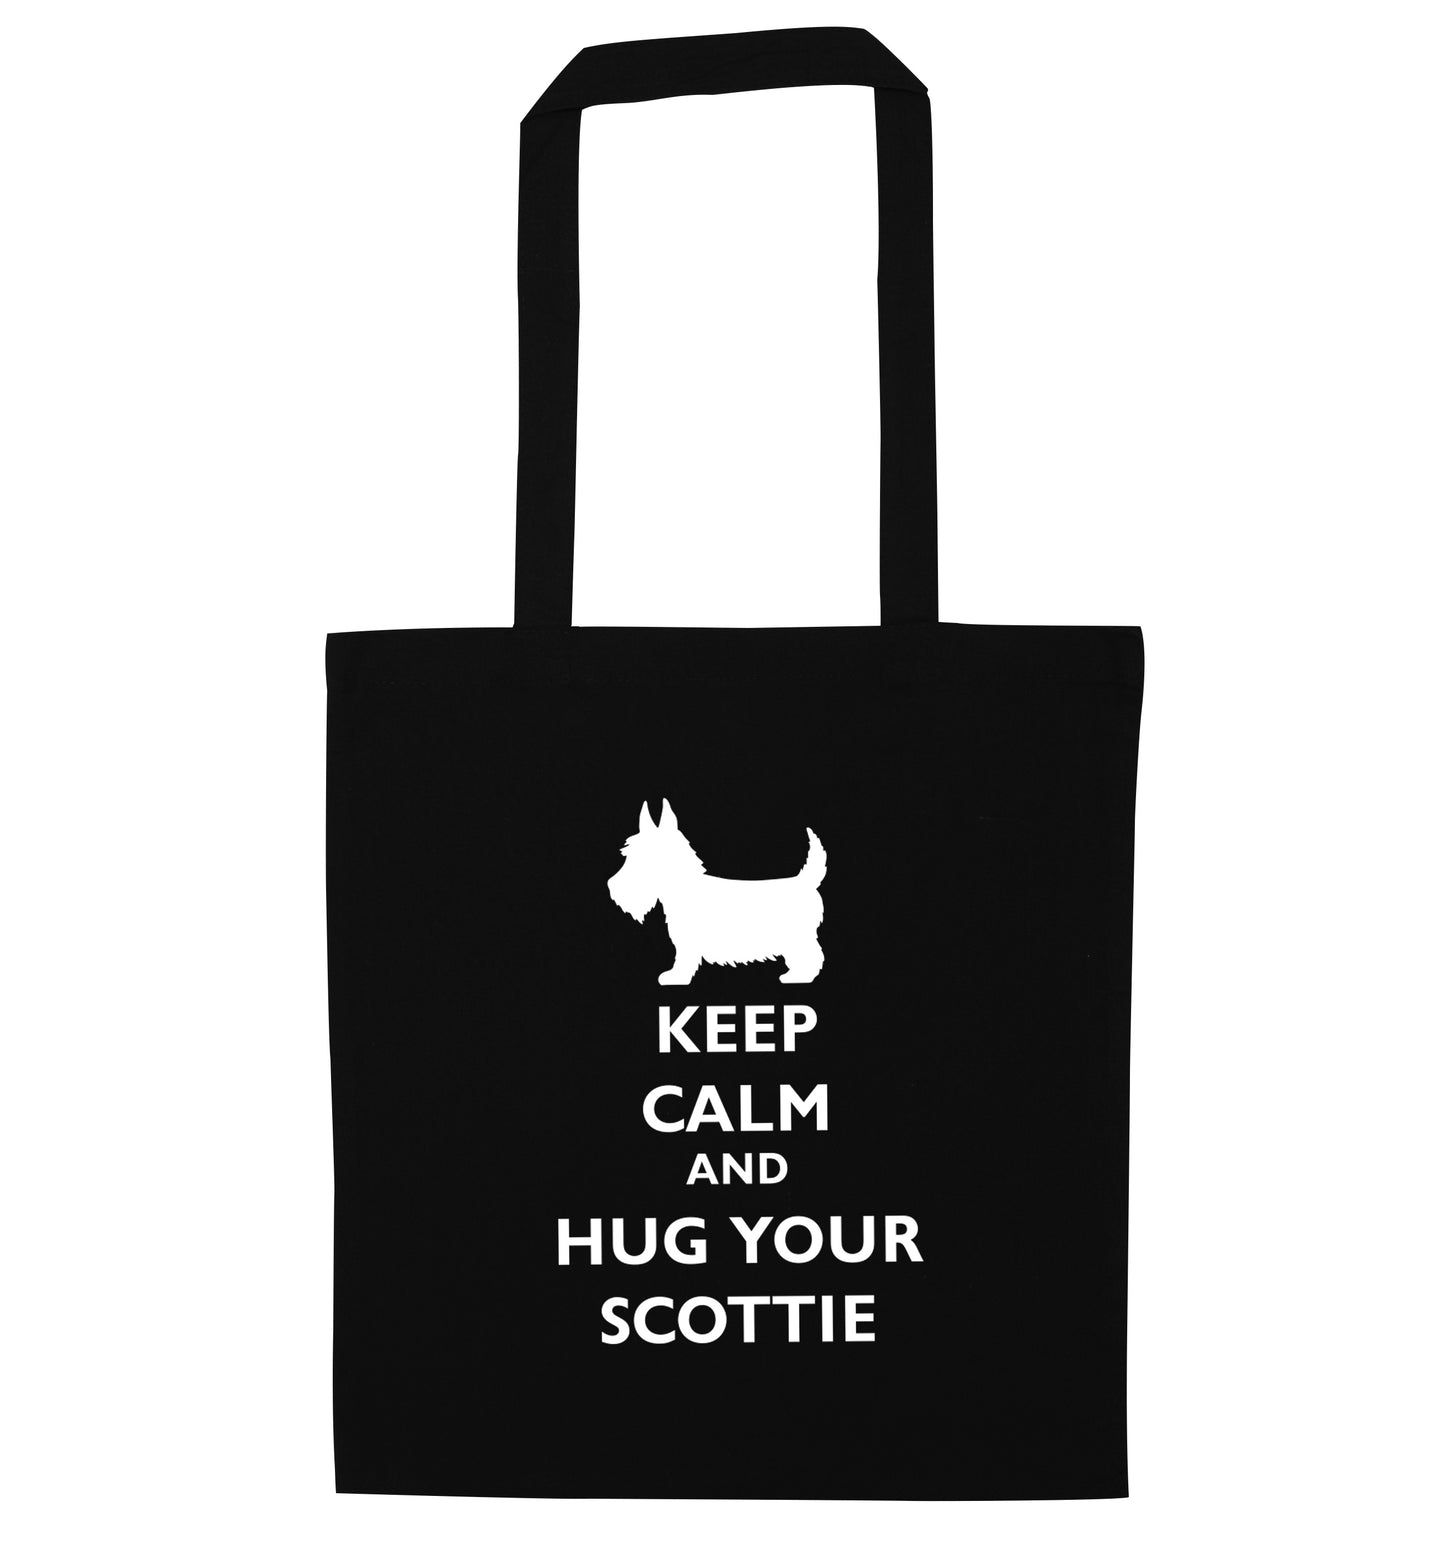 Keep calm and hug your scottie black tote bag